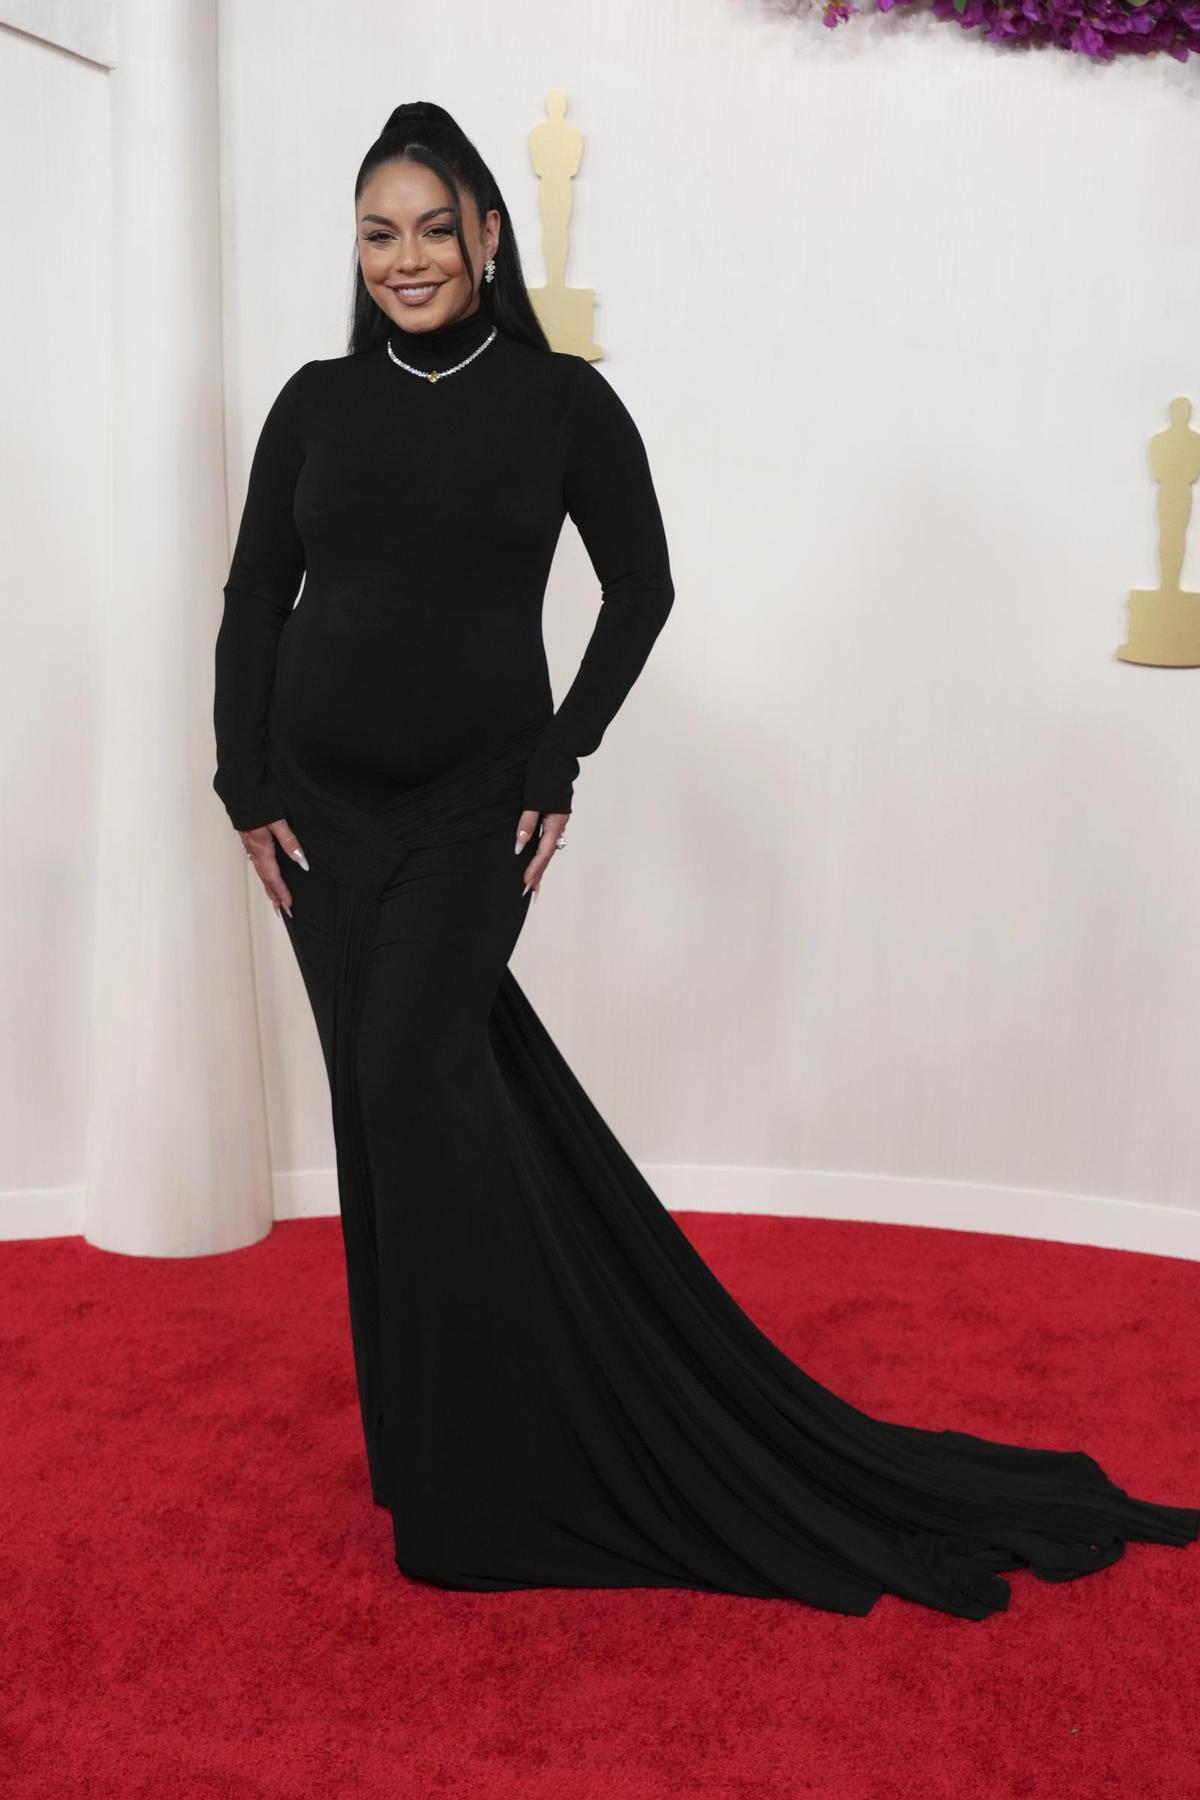 Vanessa Hudgens, actriz de 'High School Musical', ha confirmado que está embarazada al llegar a la alfombra roja.